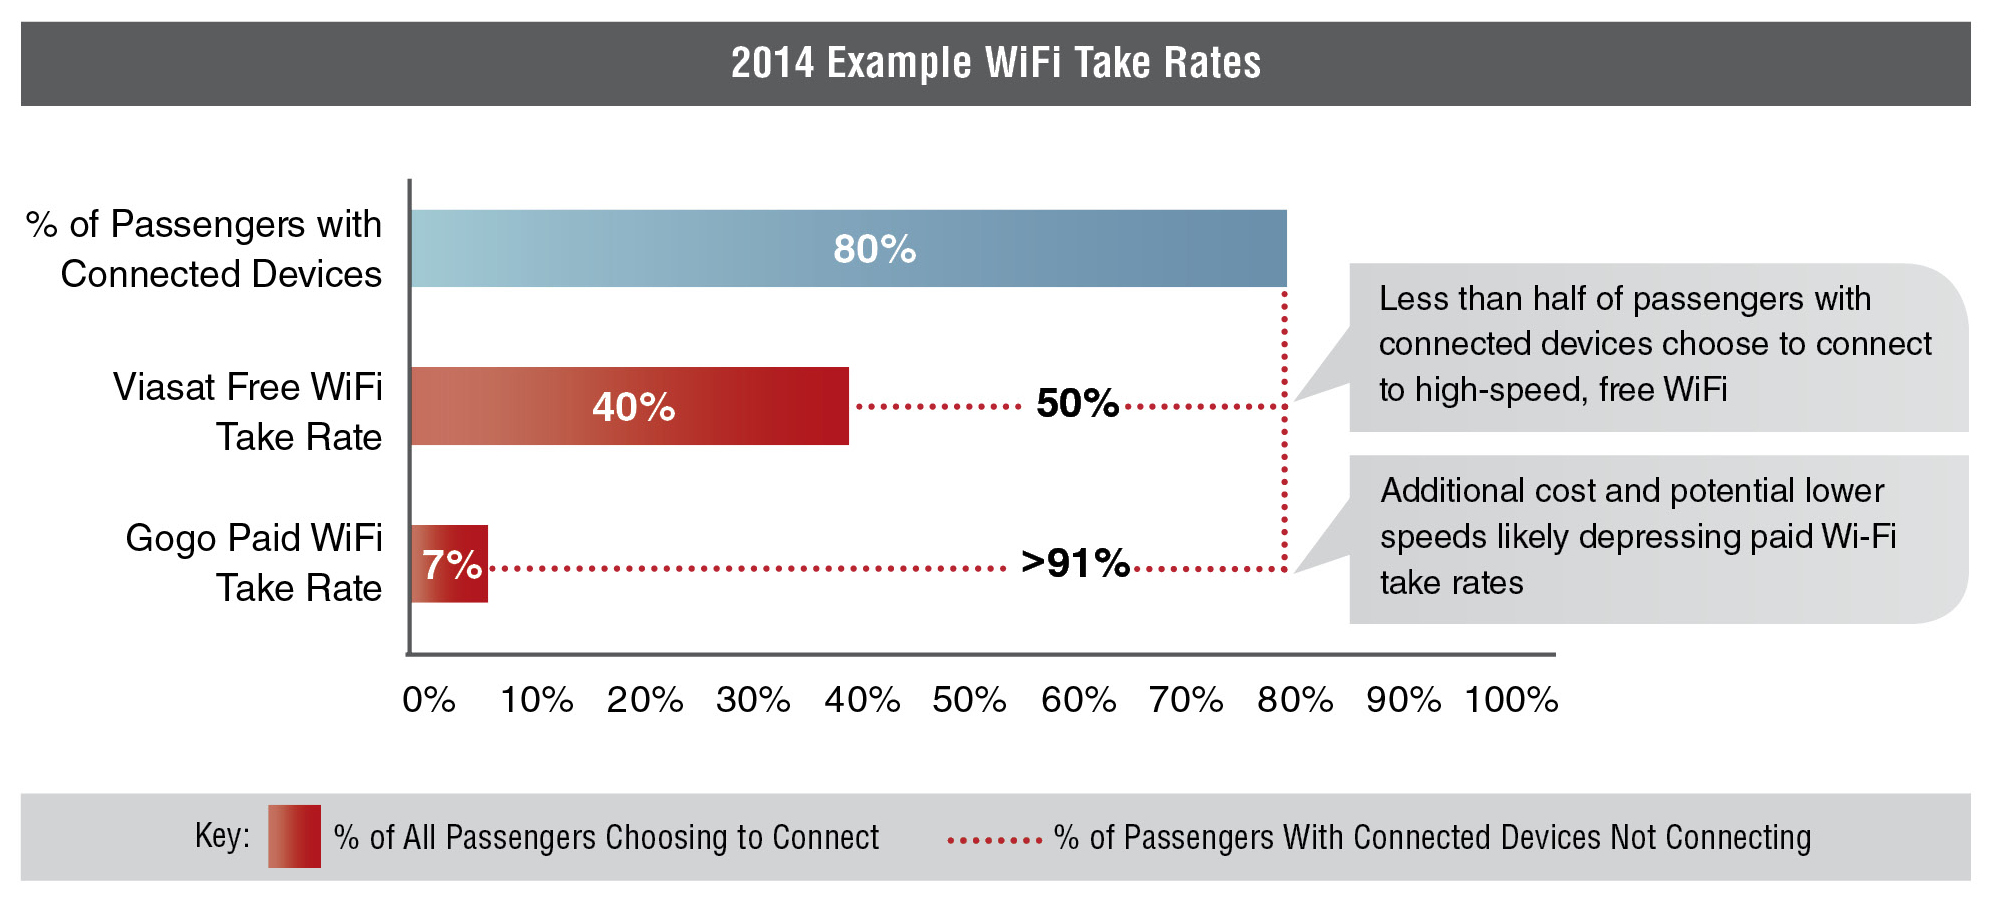 2014 Example WiFi Take Rates